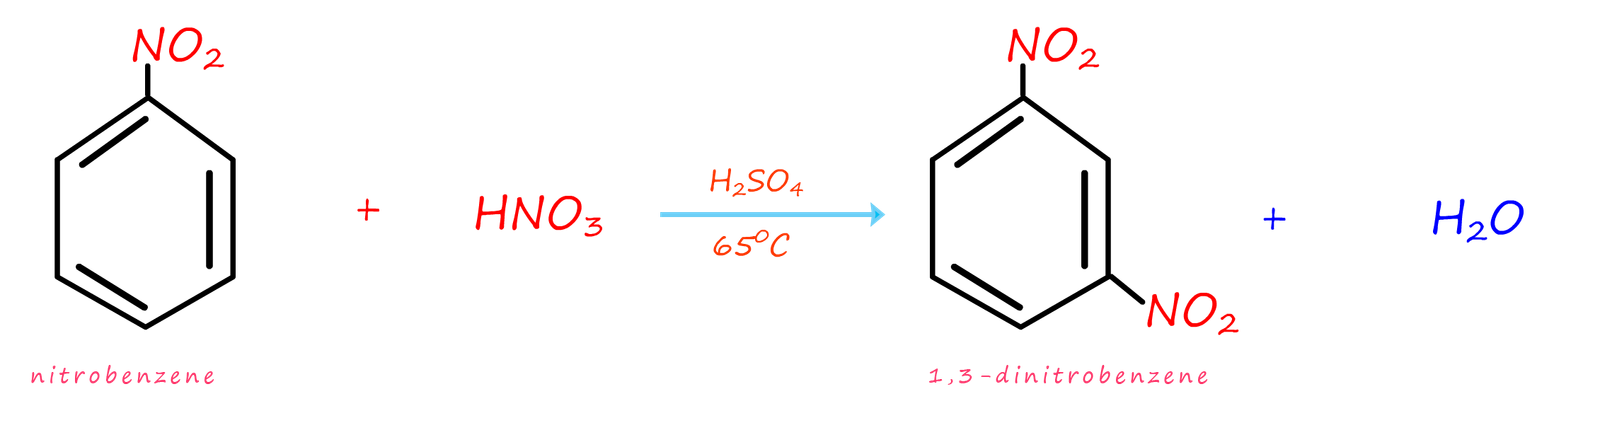 equation to show the formation of 
1,3-dinitrobenzene from nitrobenzene